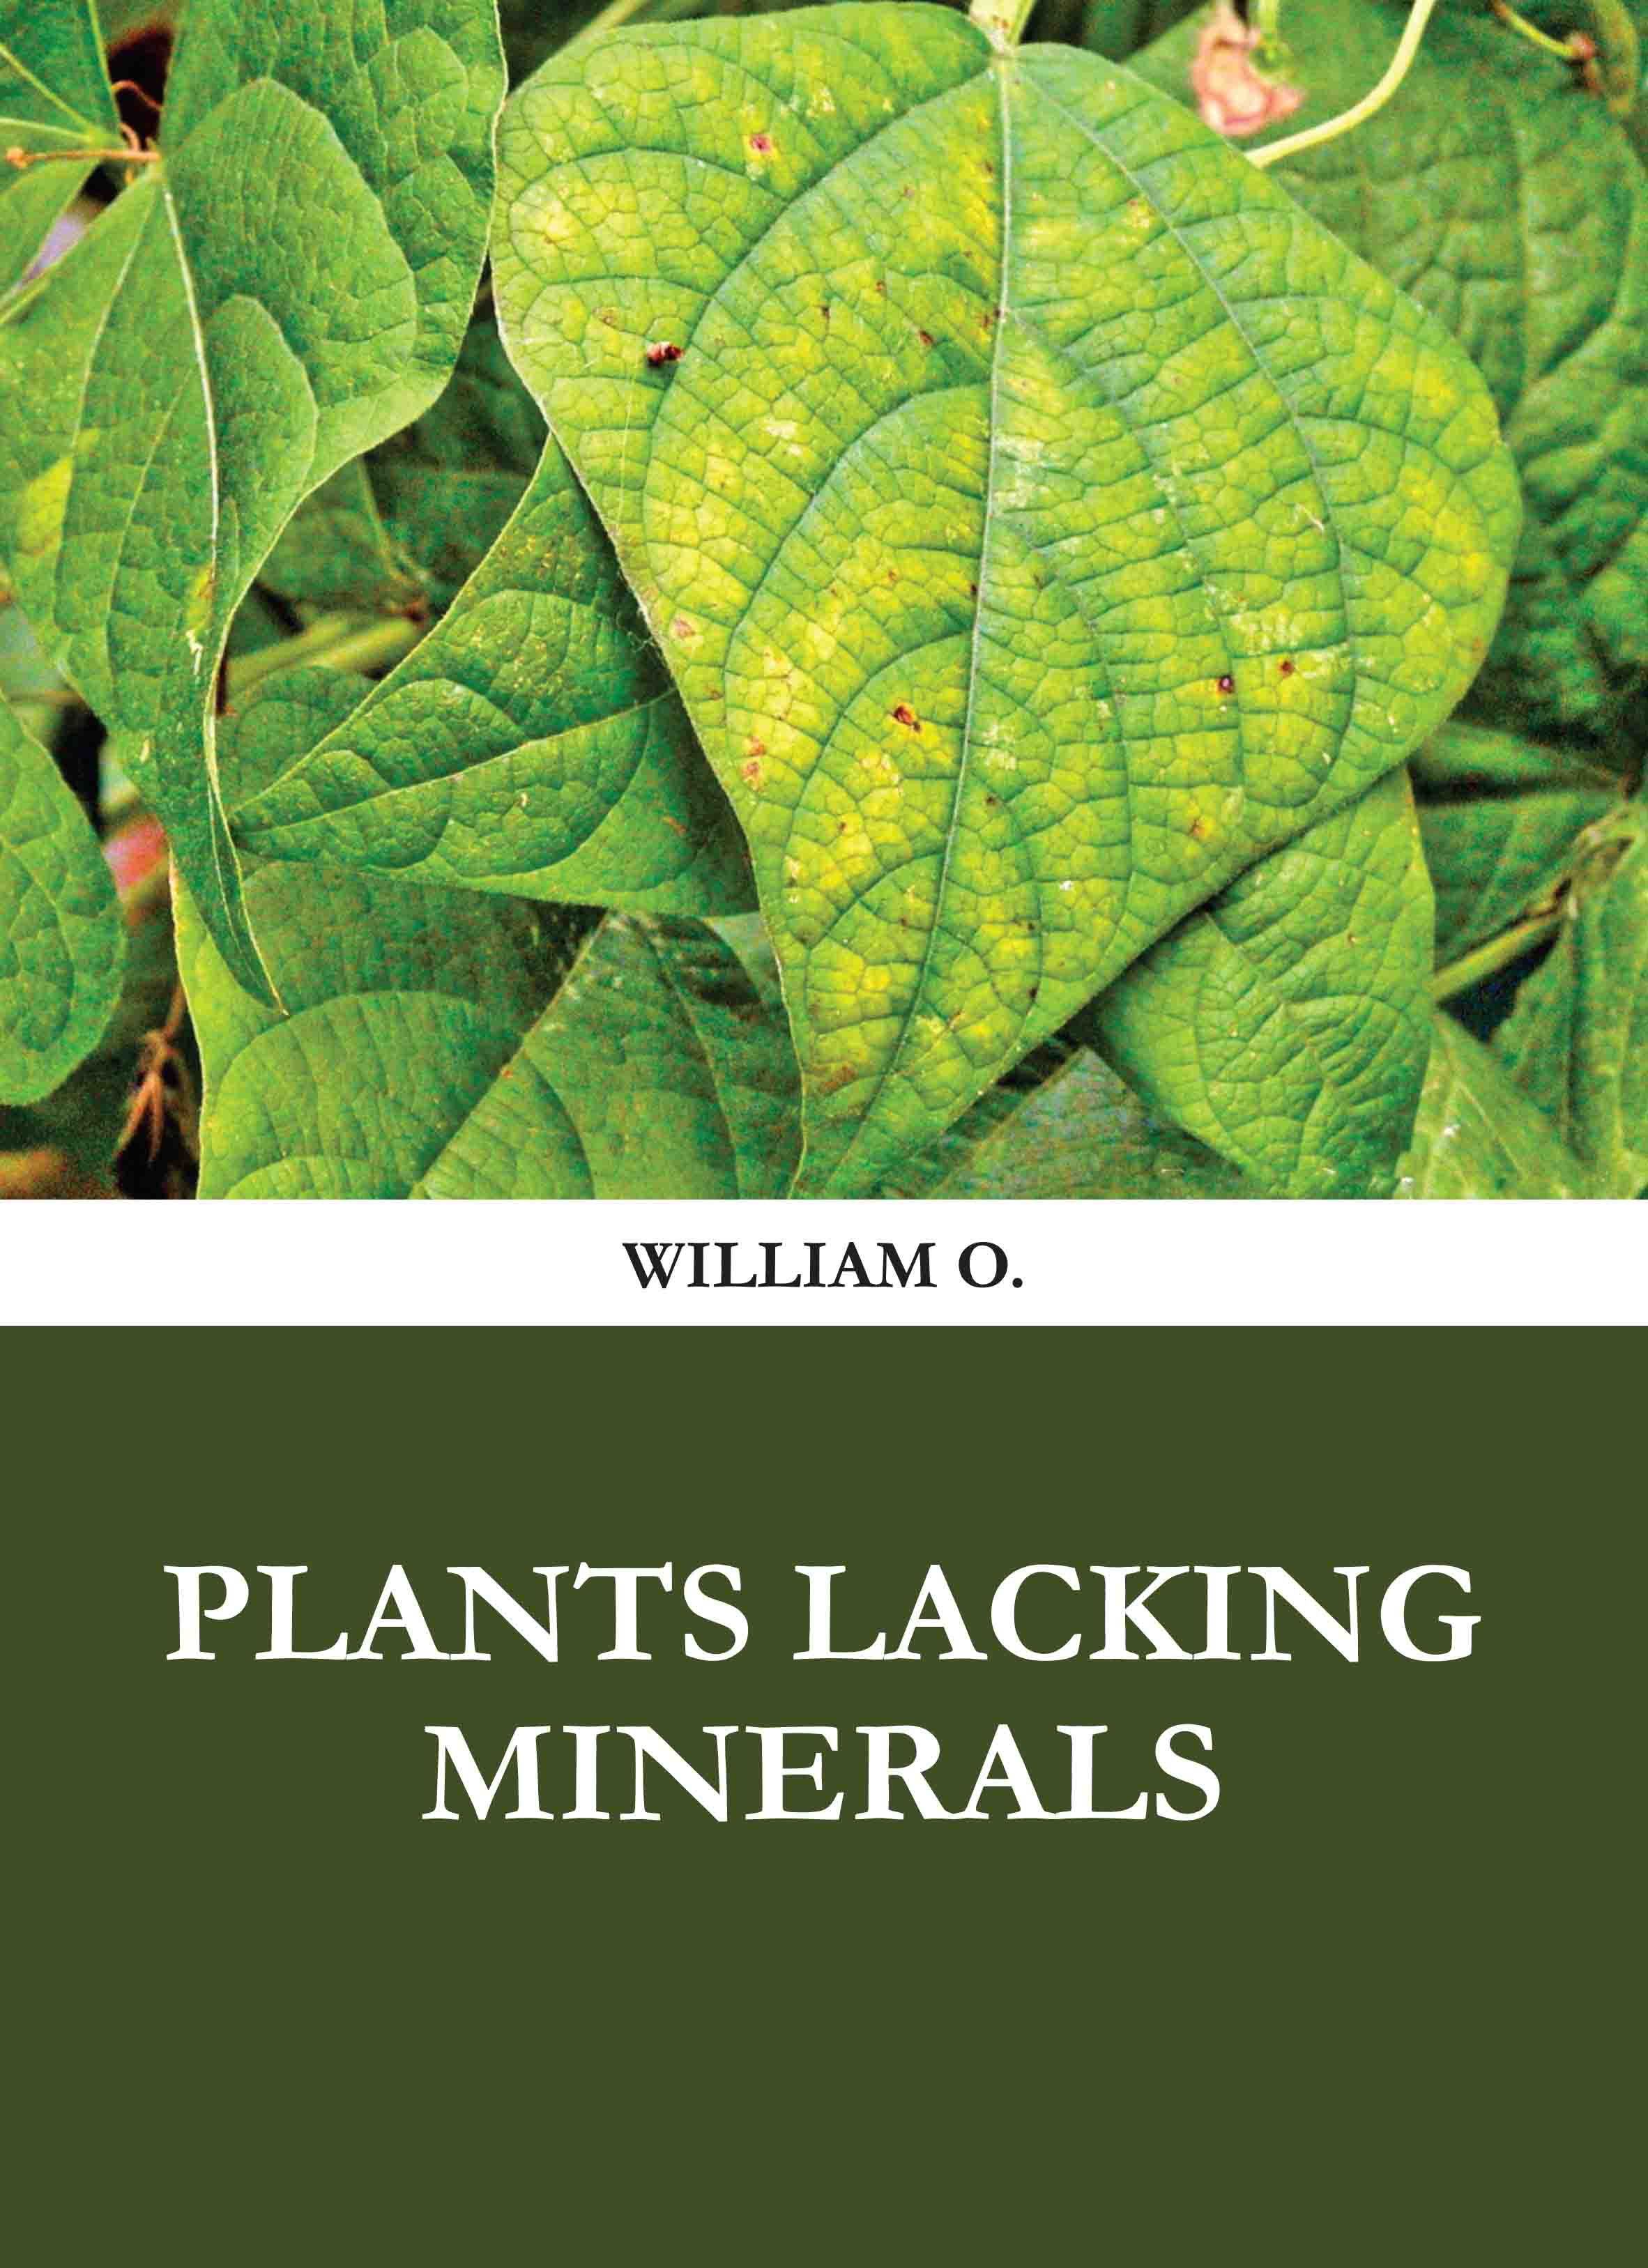 Plants Lacking Minerals